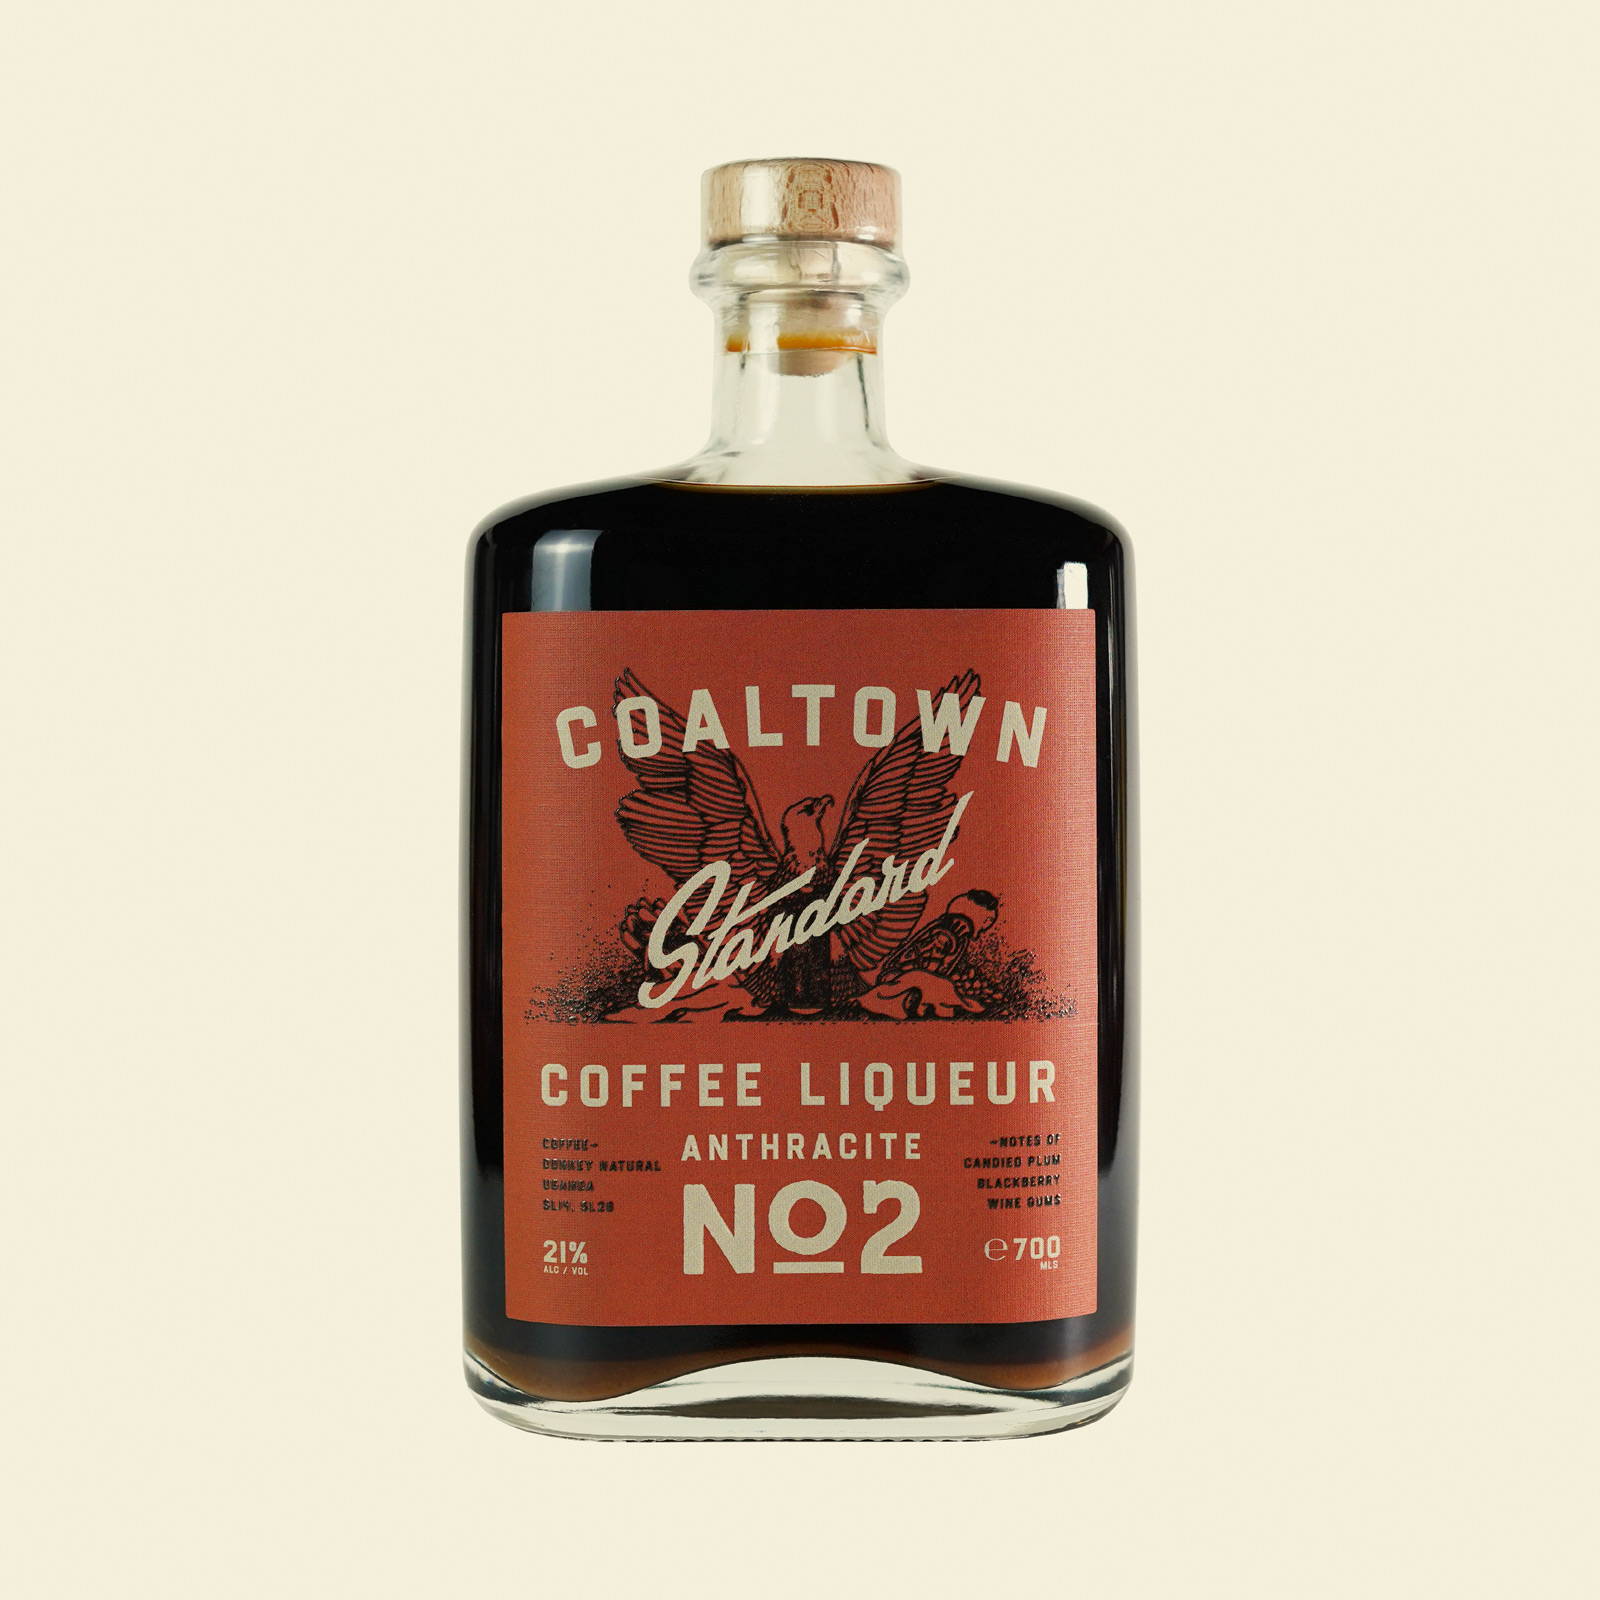 Coaltown Anthracite Coffee Liqueur